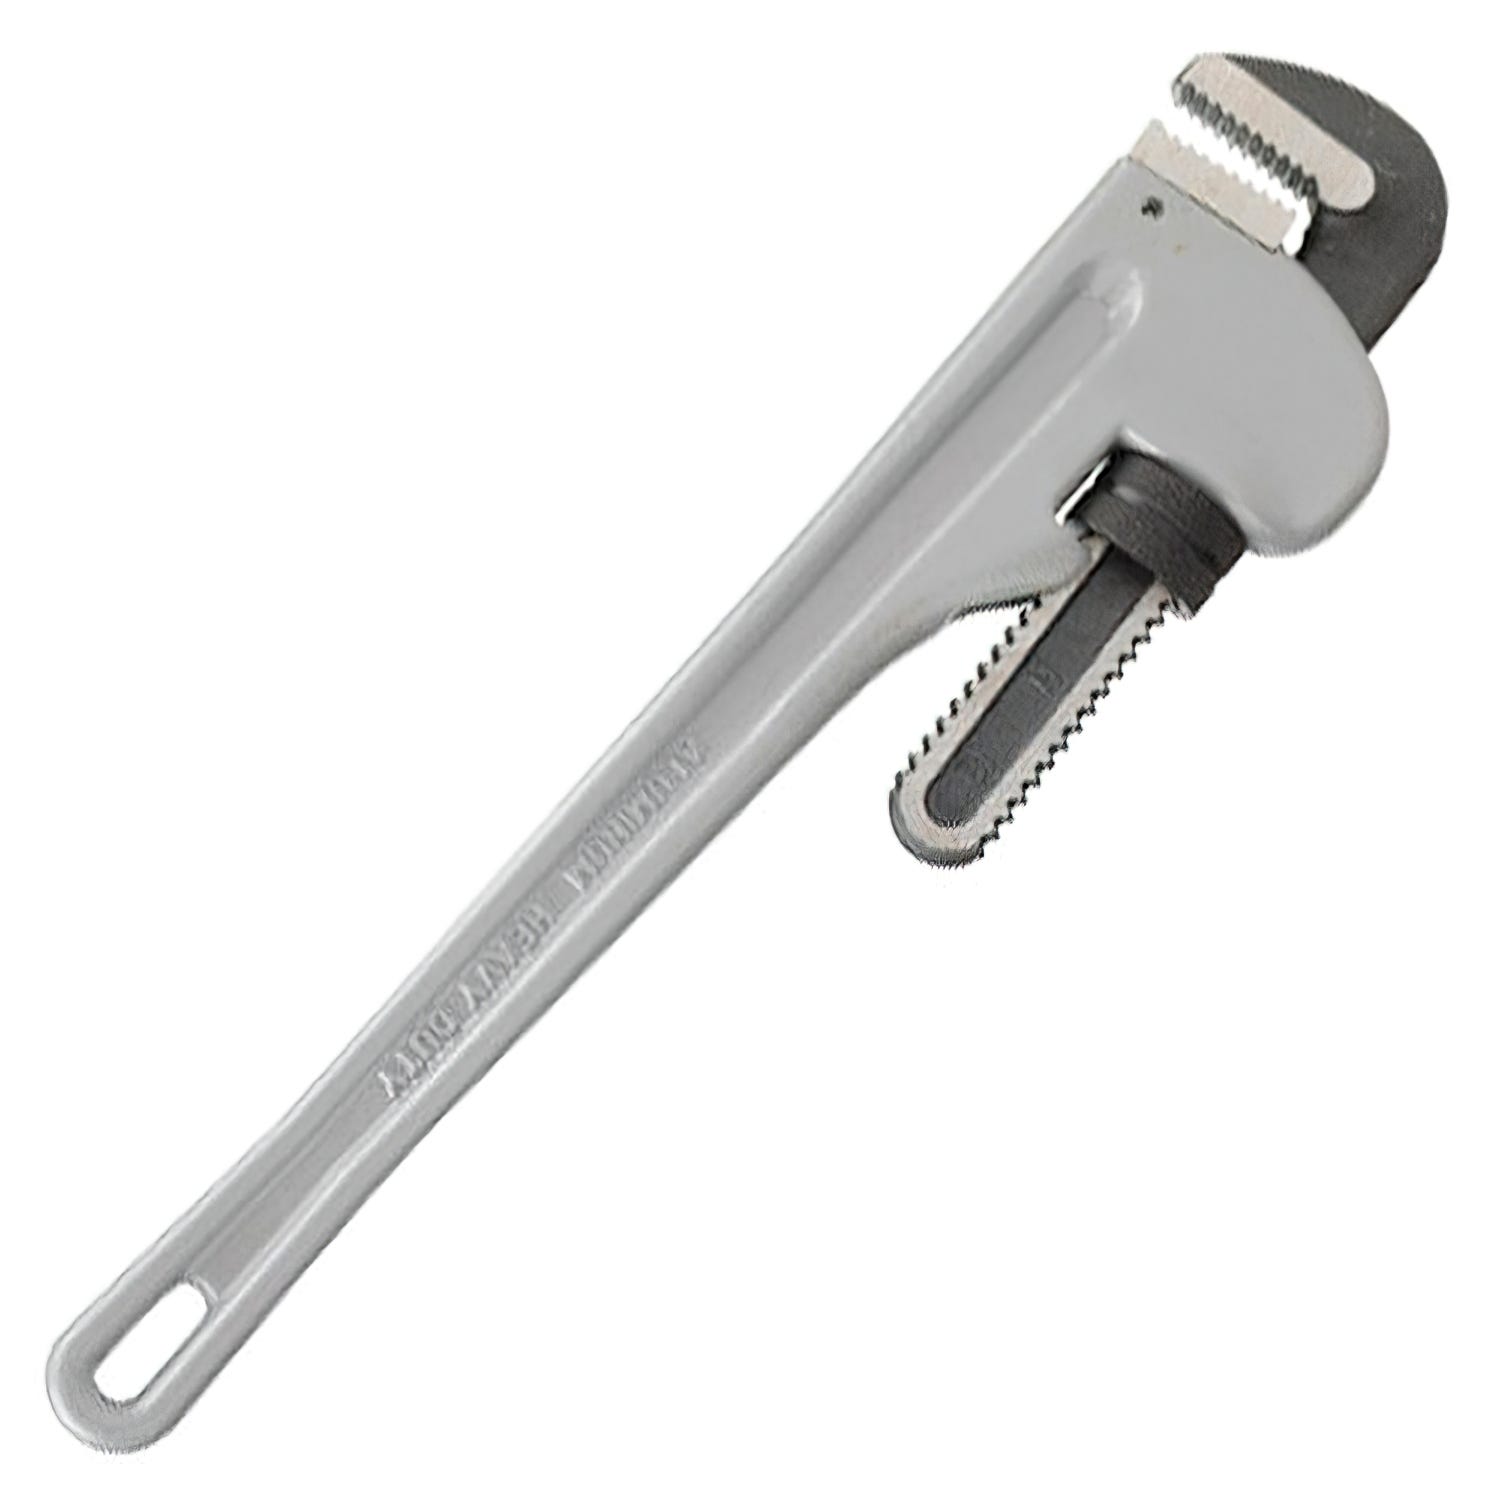 Llave stillson heavy duty aluminio 36 llave para tubos, llave plomeria,  llave para tuberias, llave grifa.